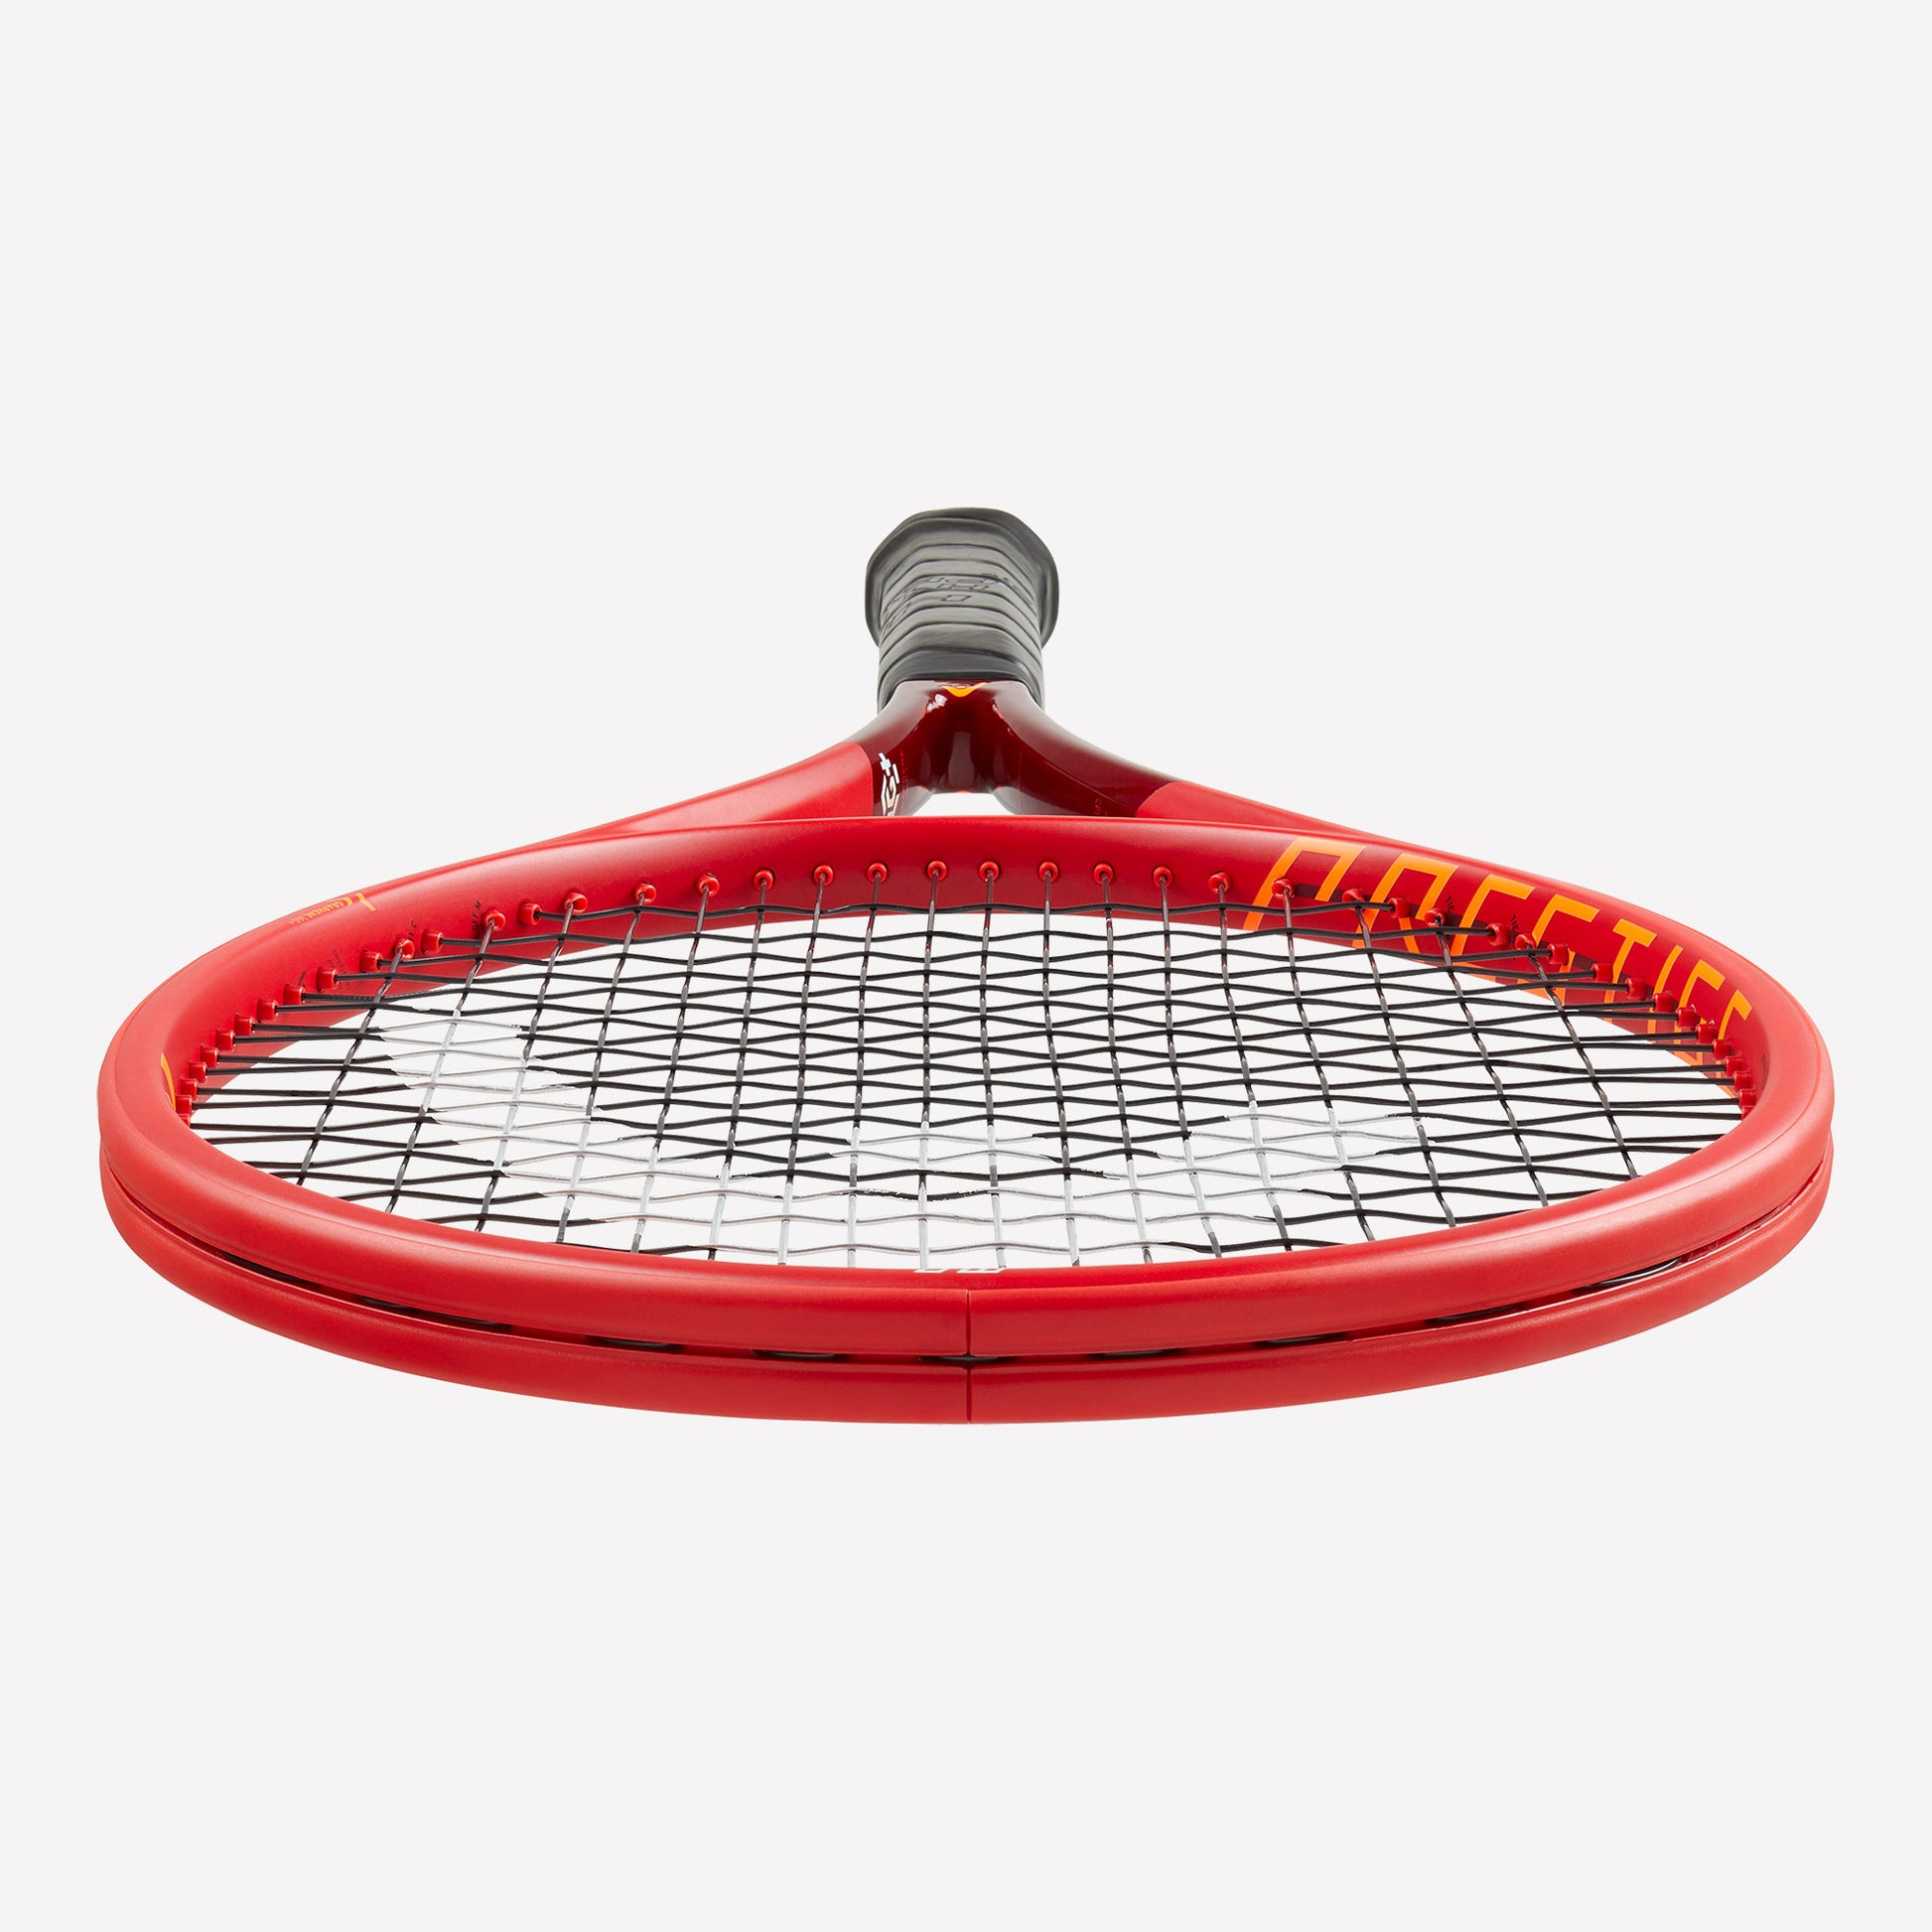 HEAD Graphene 360+ Prestige MP Tennis Racket  (4)